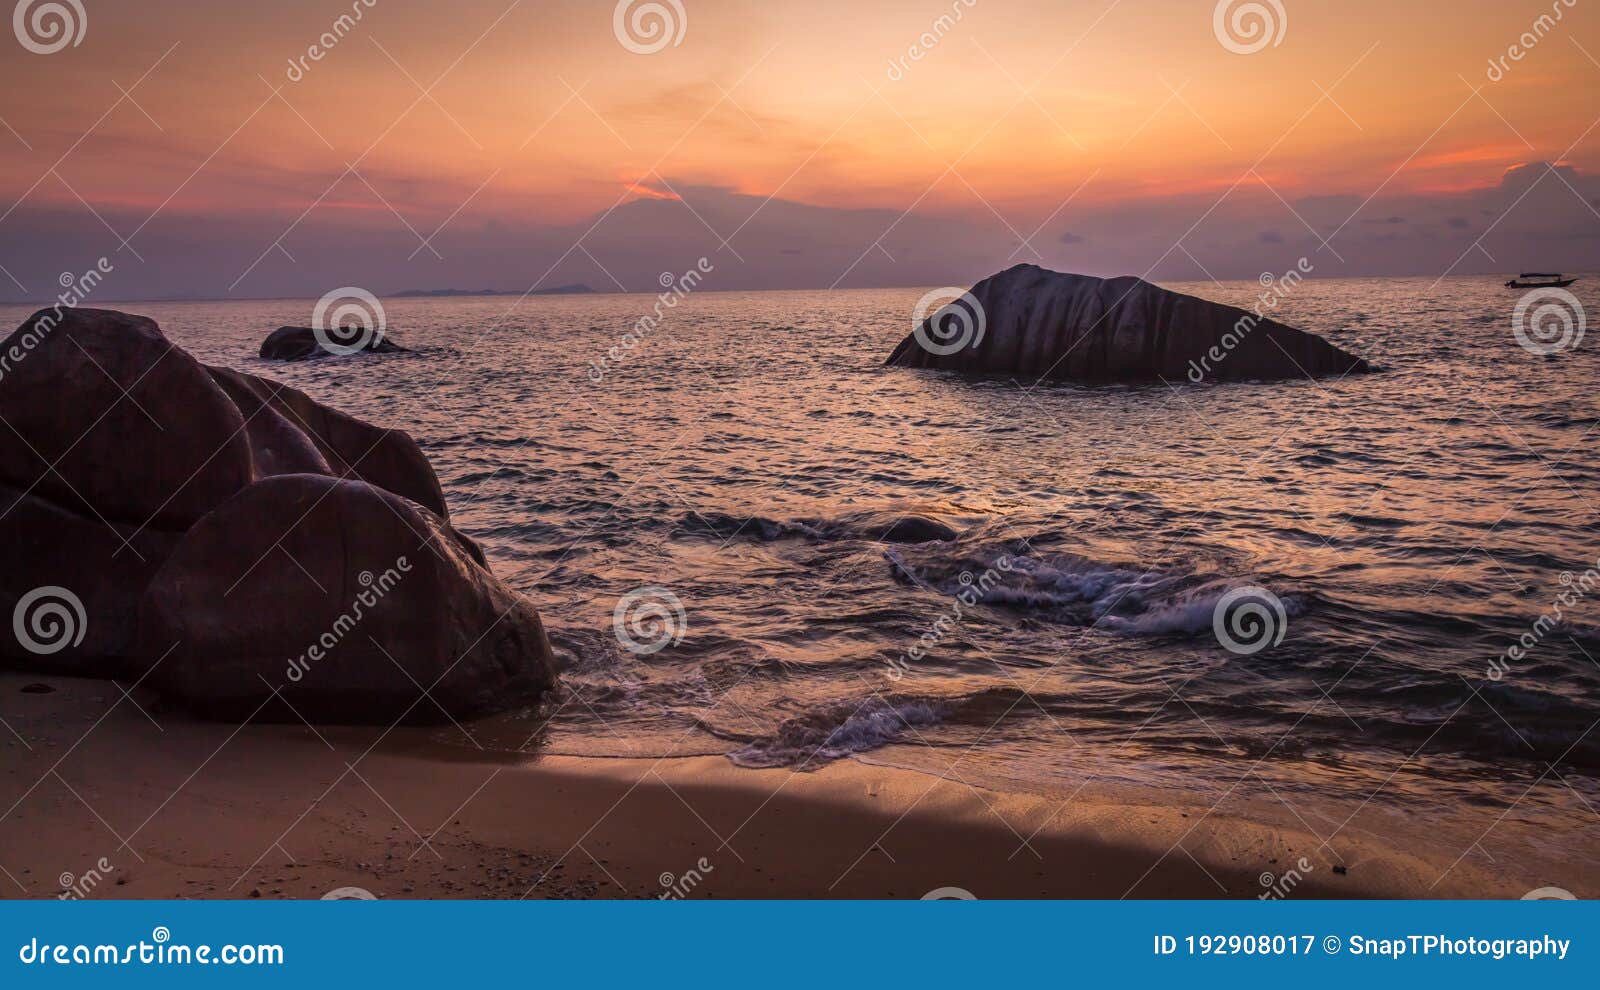 rocks on melina beach at sunset, tiomen island, malaysia